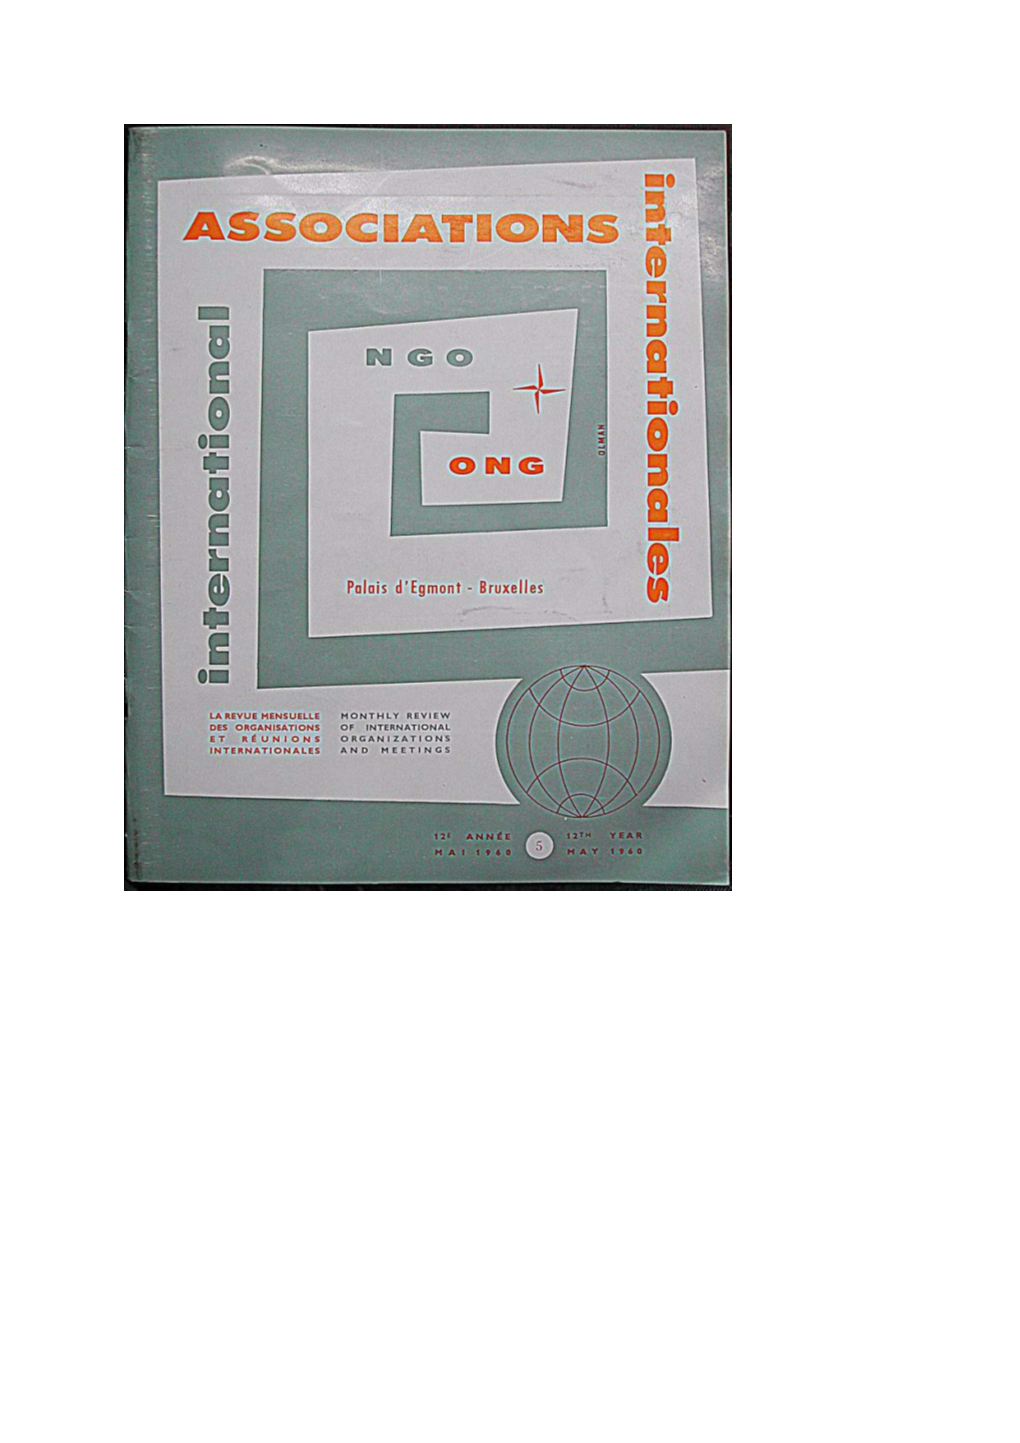 Union of International Associations